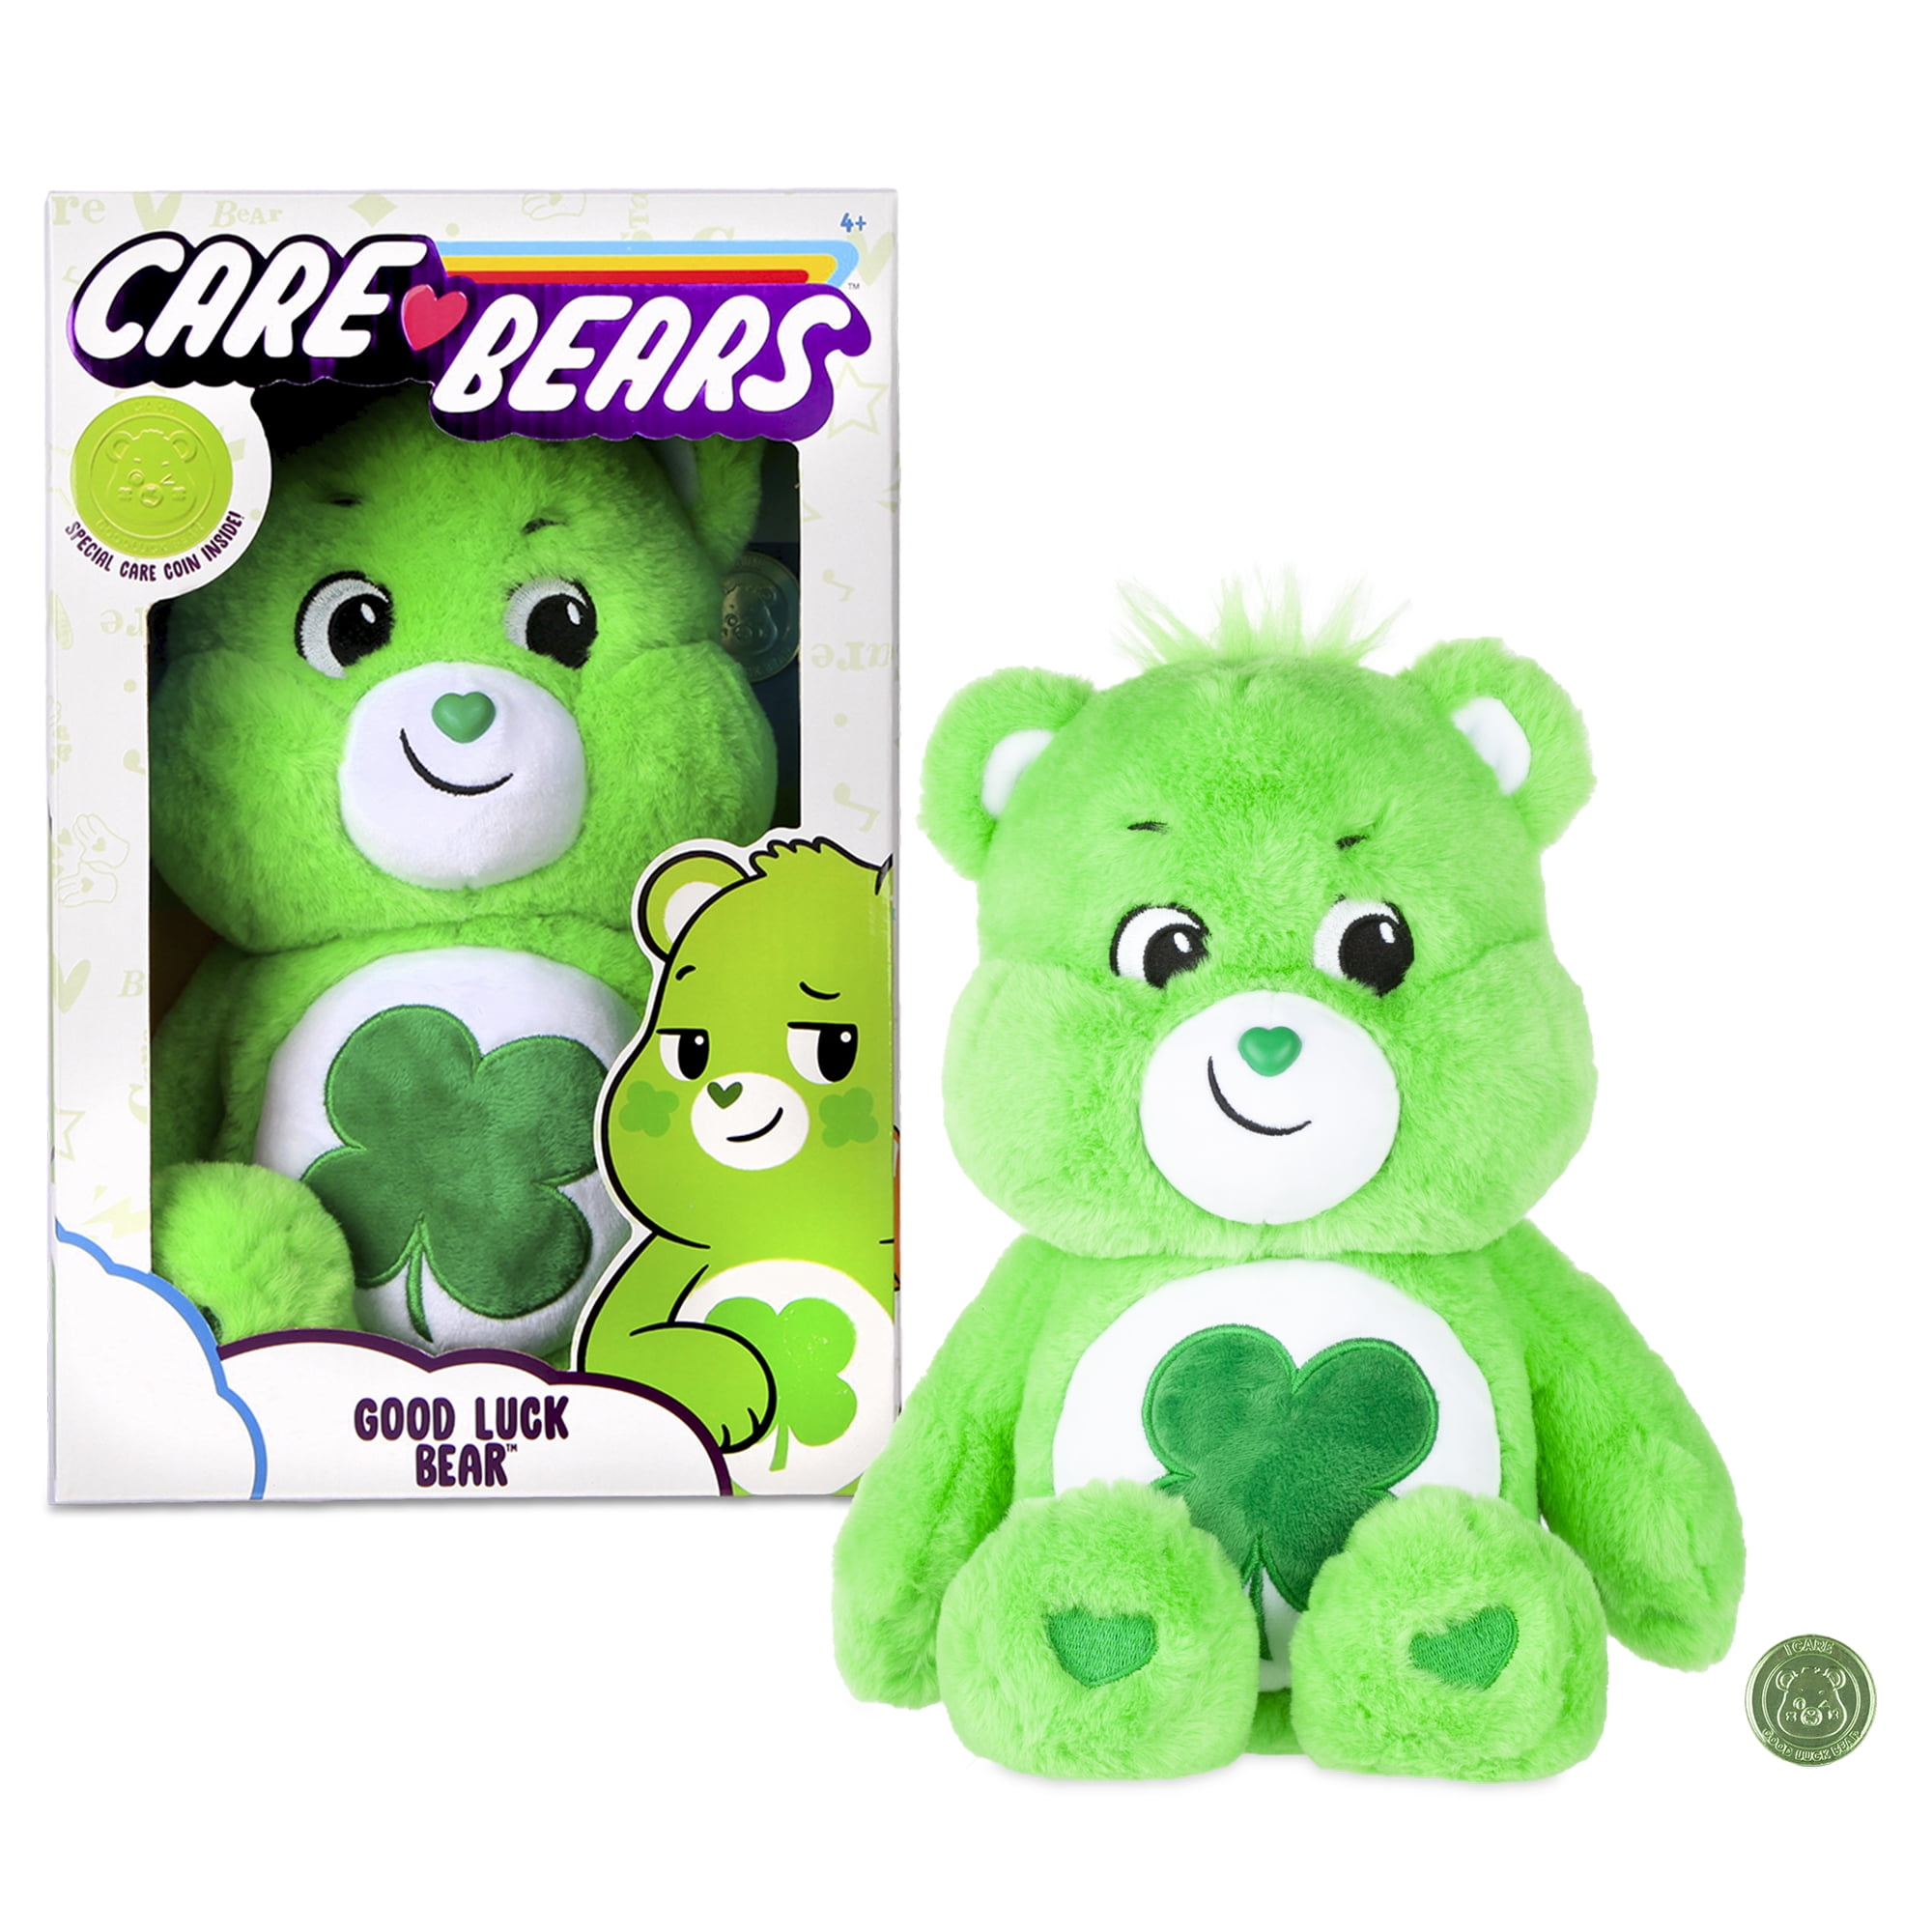 Care Bears Basic Good Luck Bear 14" Medium Plush Stuffed Animal